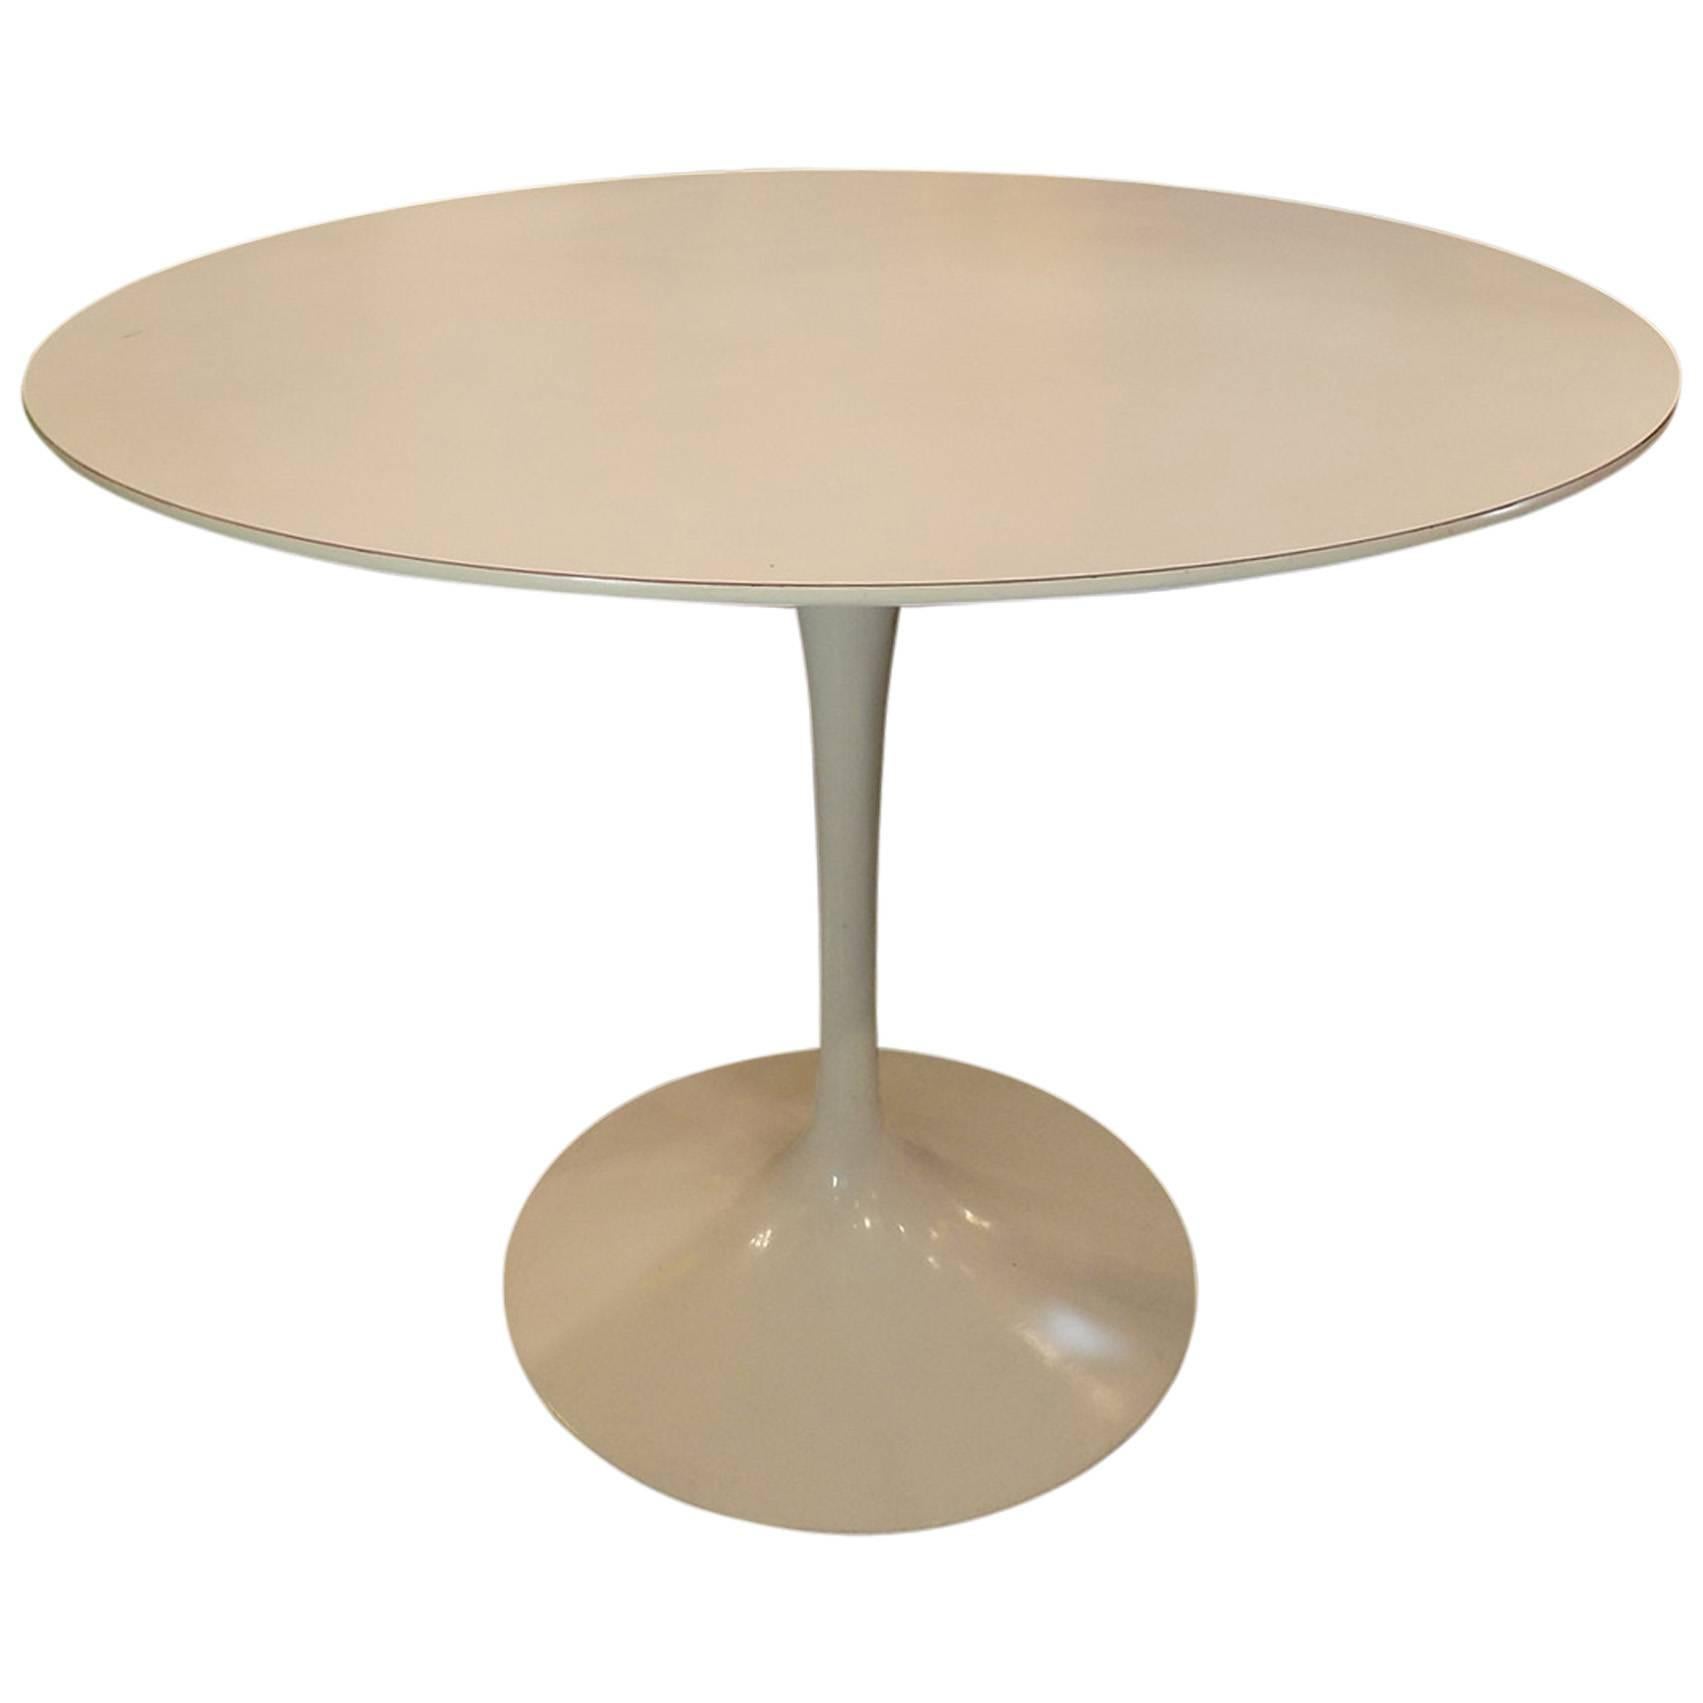  Beautiful Saarinen Tulip Table Knoll Edition For Sale